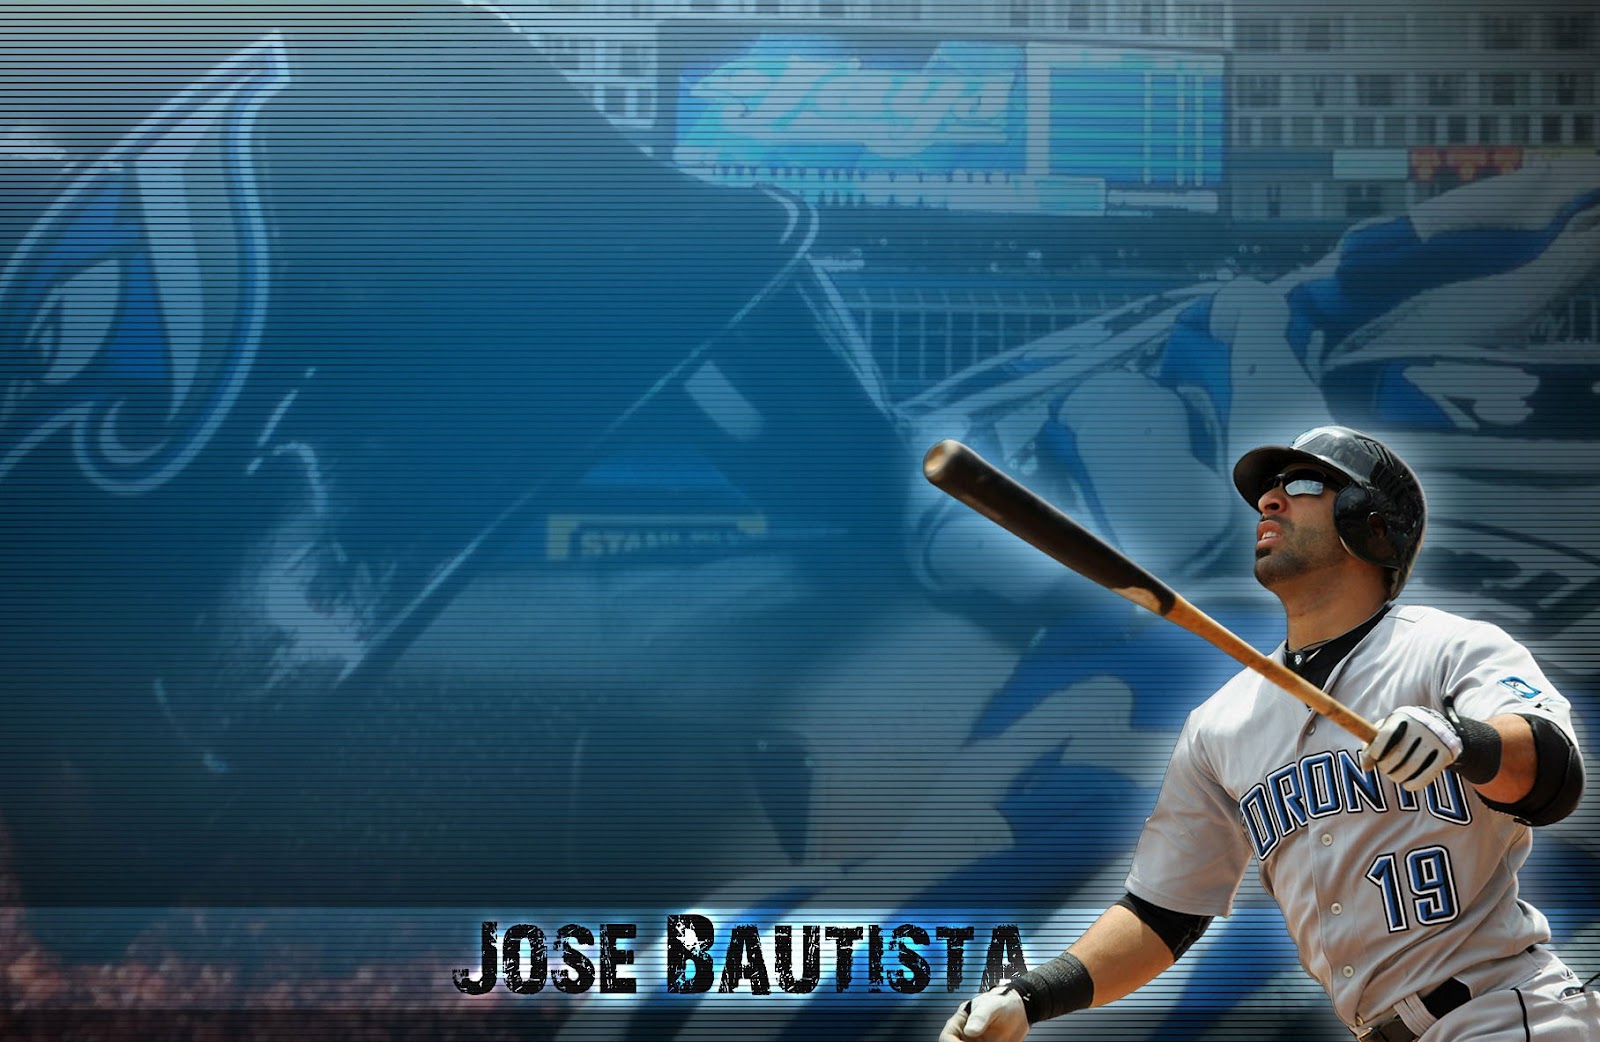 Beauty Babes: Baseball Babe #98 Jose Bautista Toronto Blue Jays